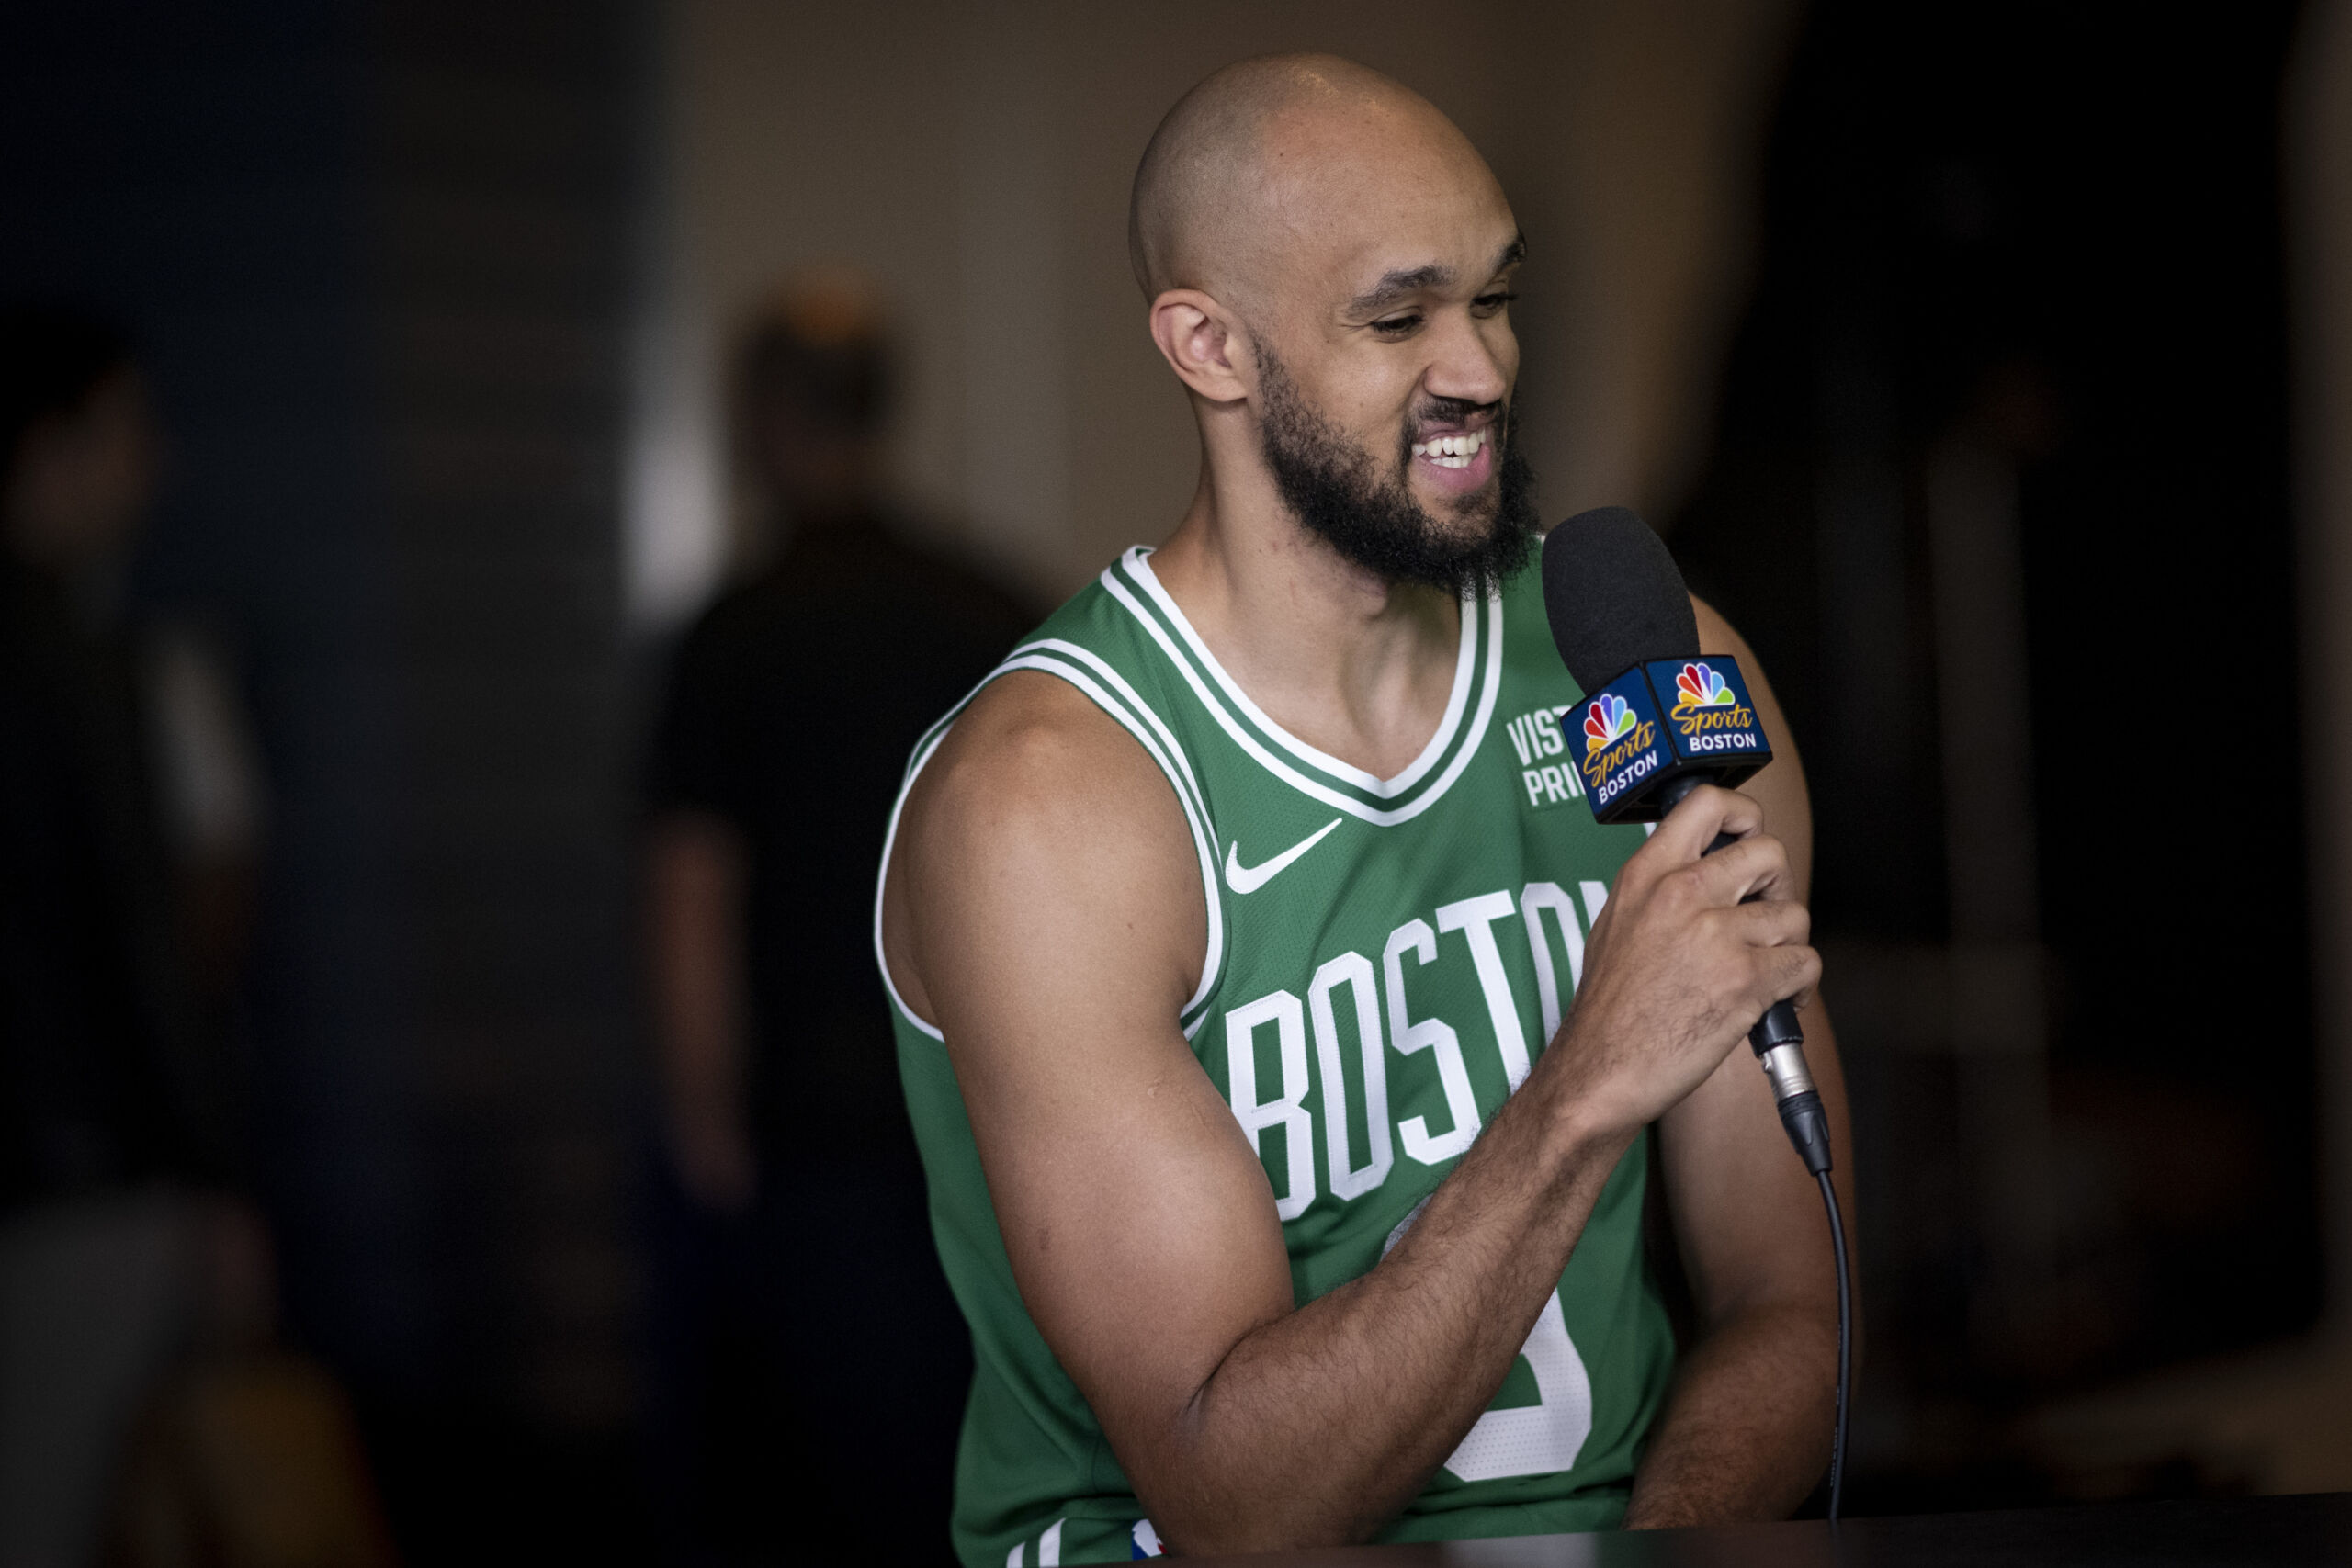 Jrue Holiday - Boston Celtics Point Guard - ESPN